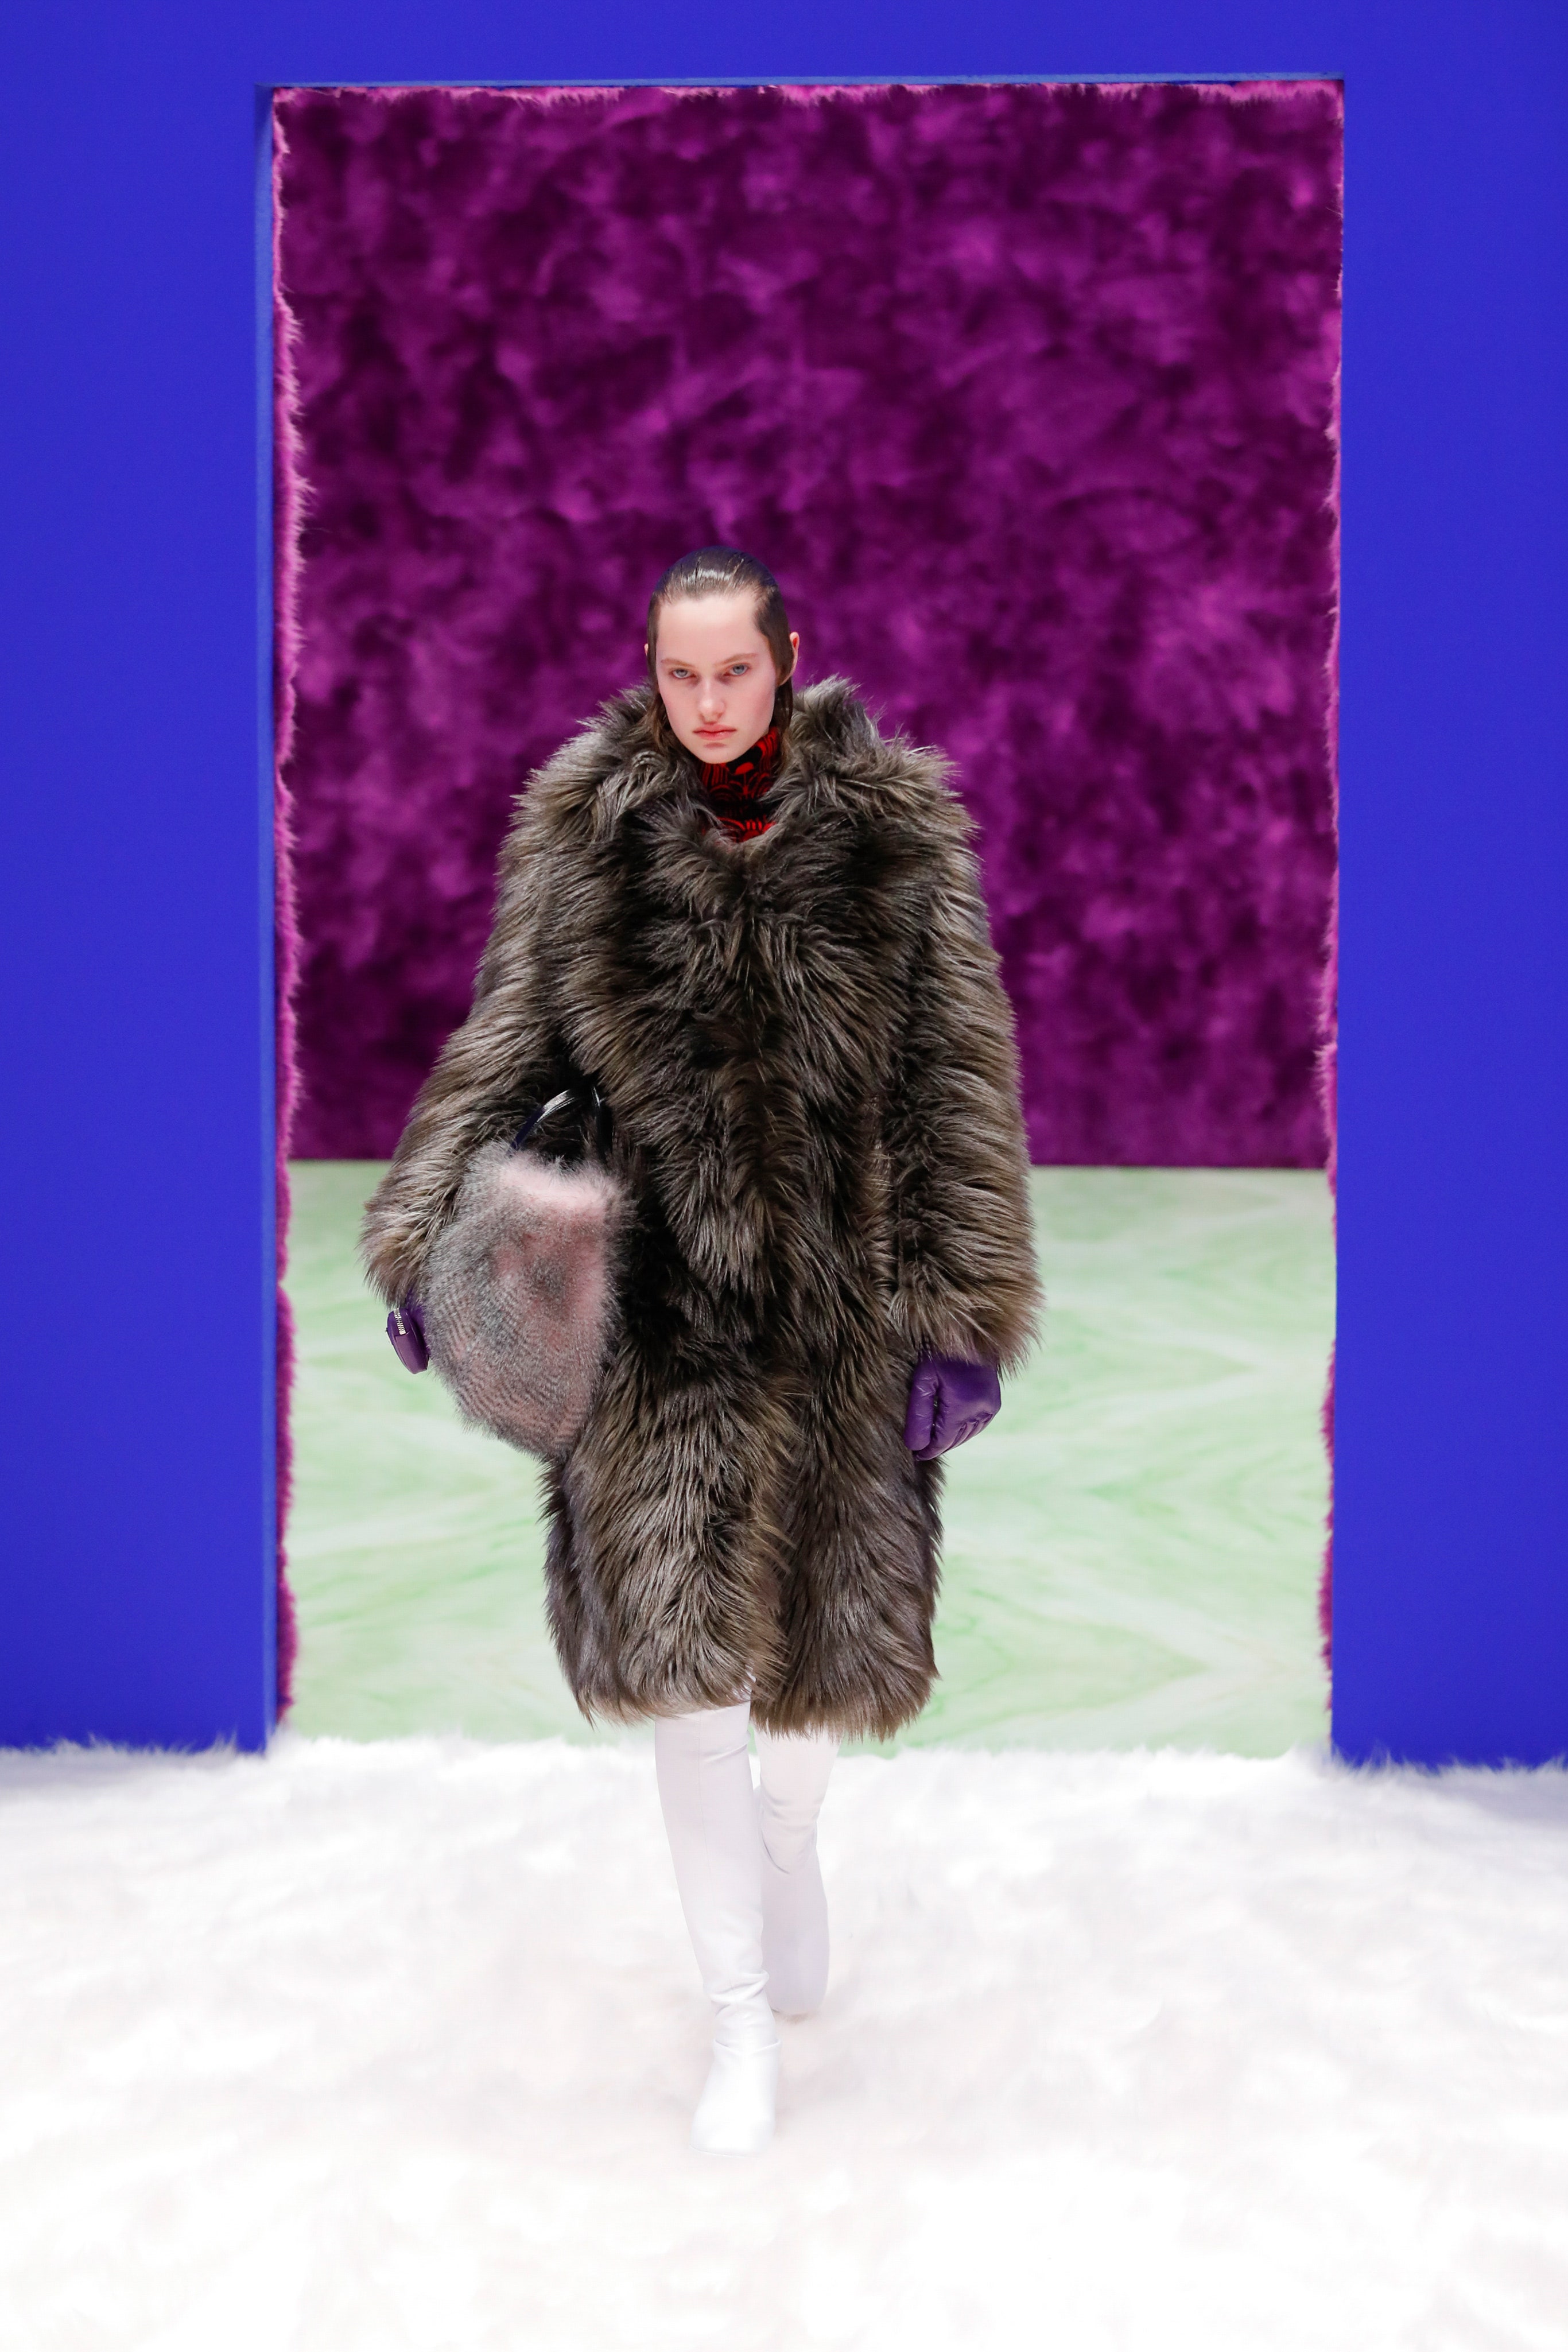 Fall winter 2021 runway report: The 12 best Fall Winter fashion